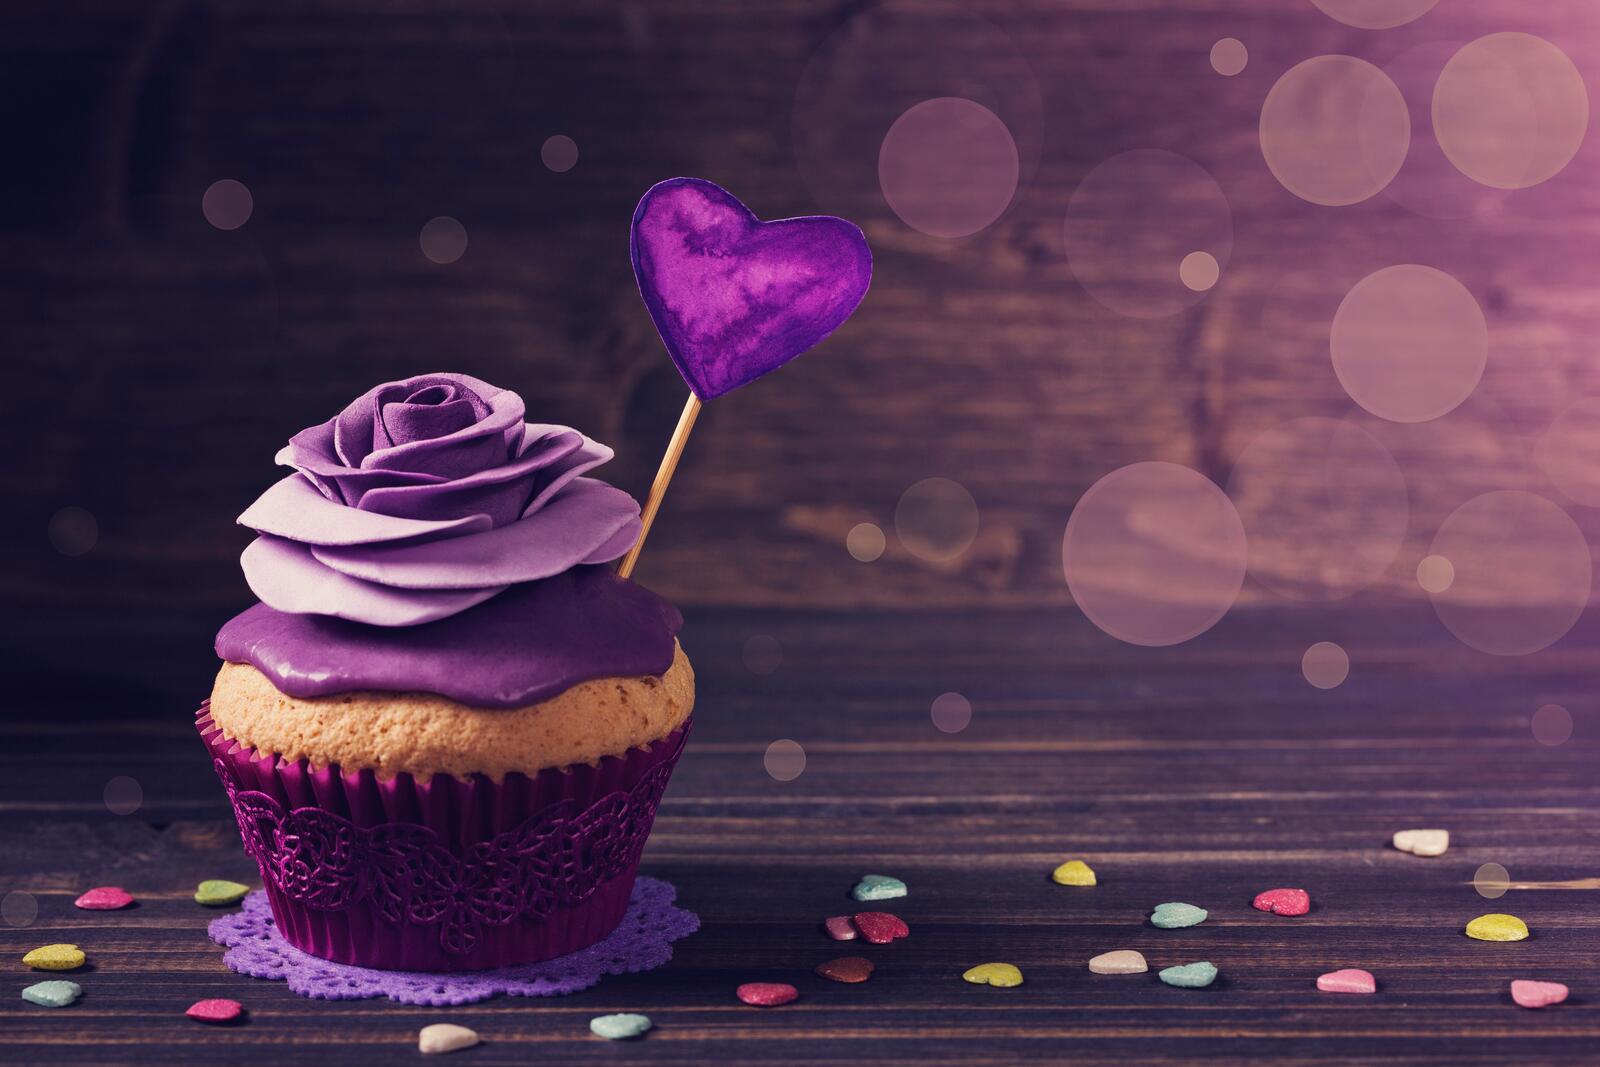 Free photo Cupcake with purple heart